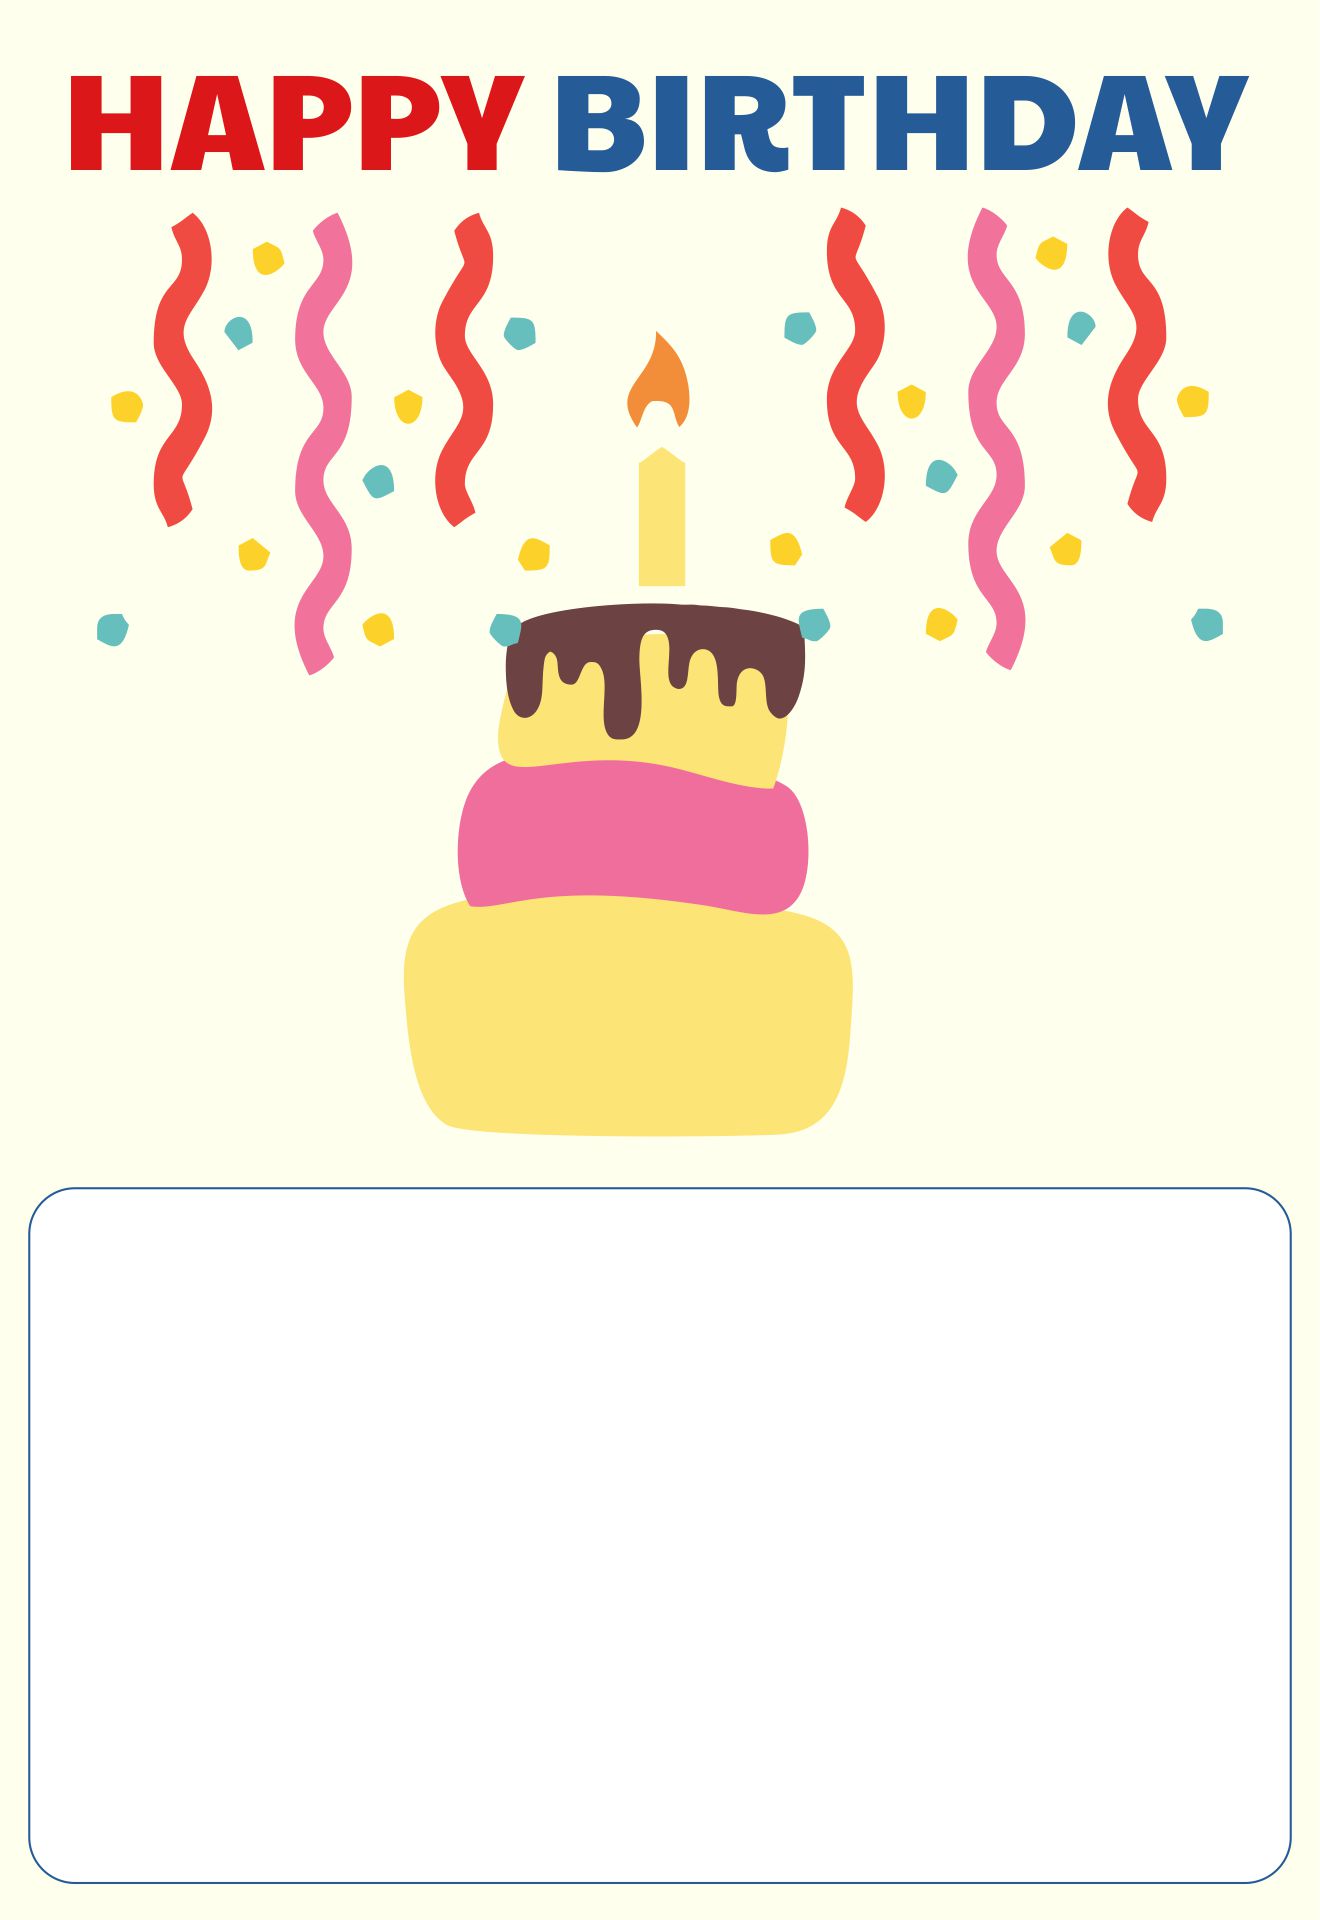 cinemaa-happy-birthday-wishes